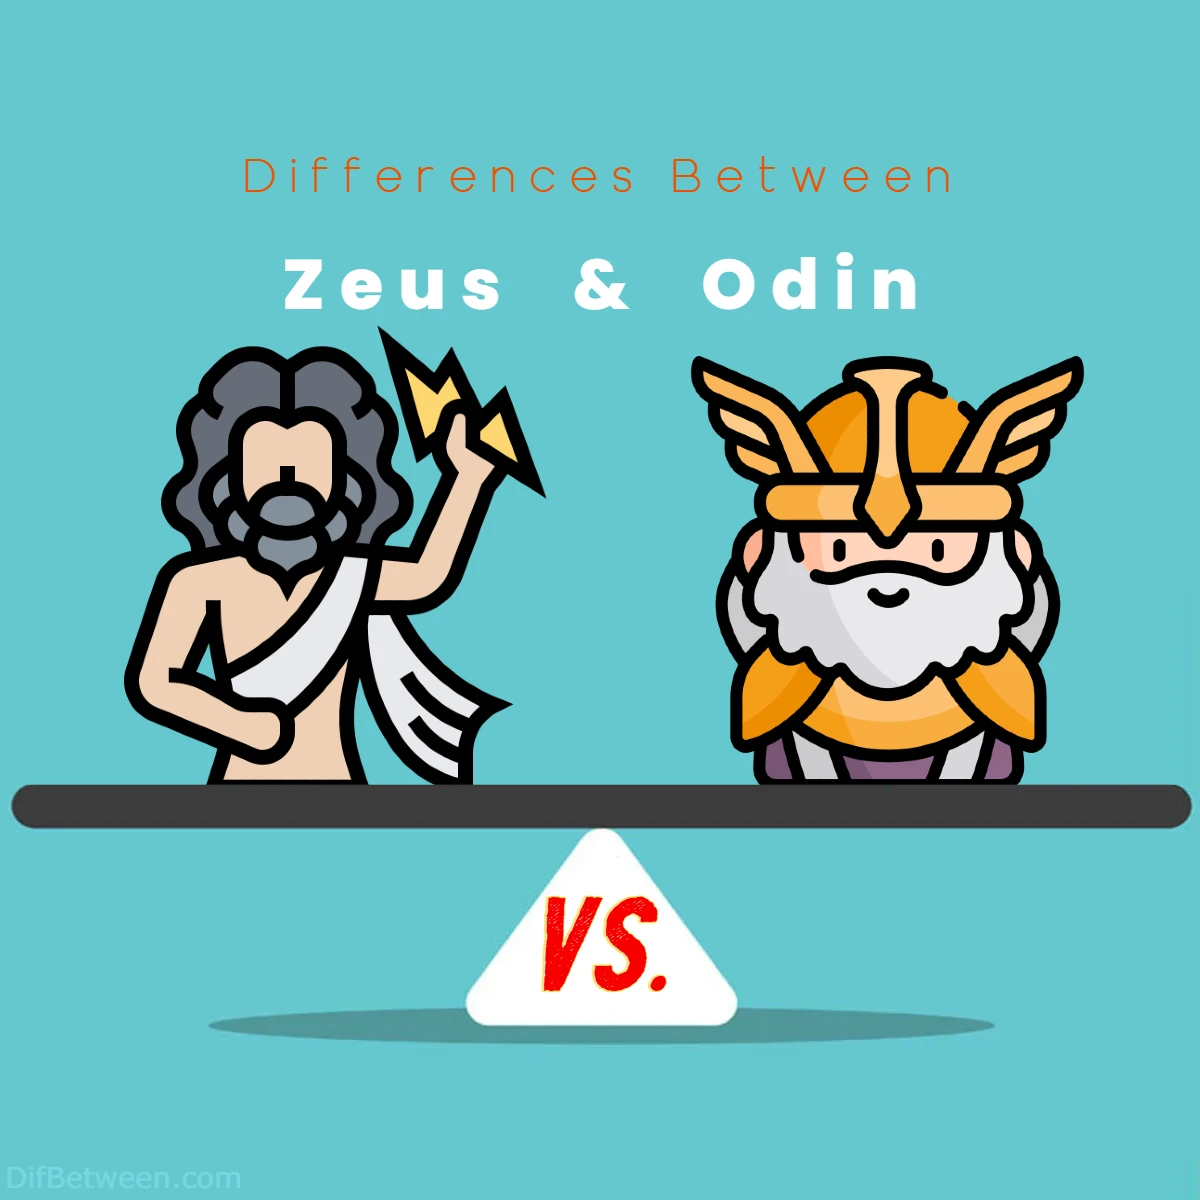 Differences Between Zeus vs Odin